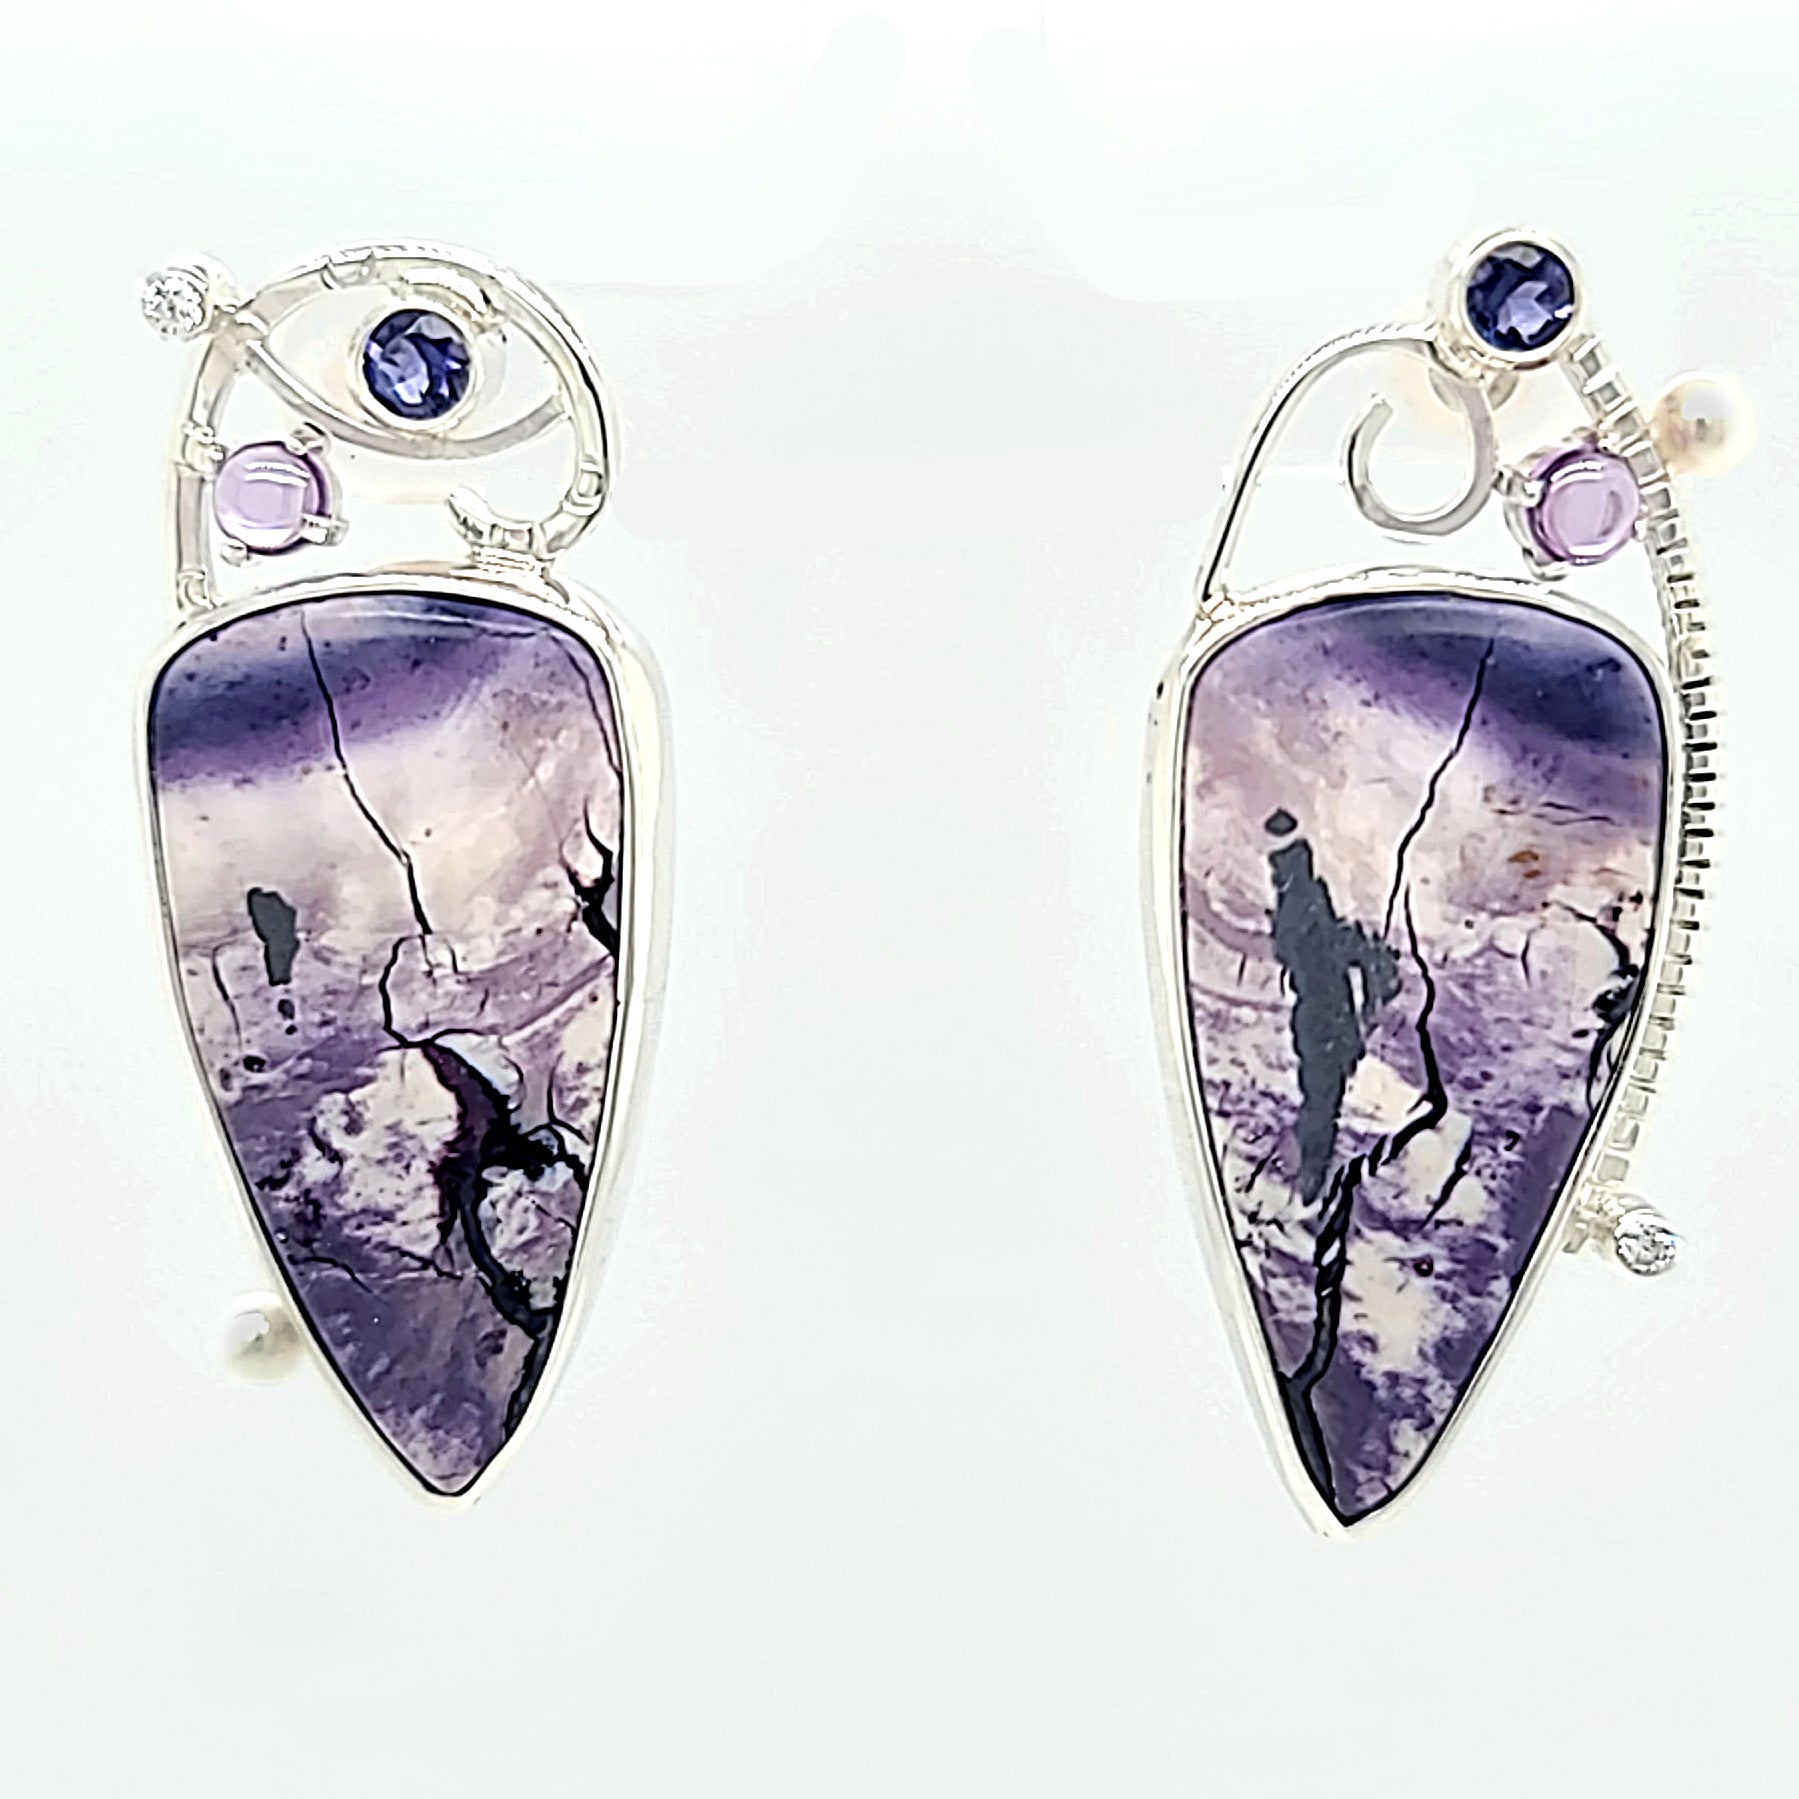 Tiffany Jasper, Iolite, Freshwater Pearls and Amethyst set in Sterling Silver asymmetric earrings.  